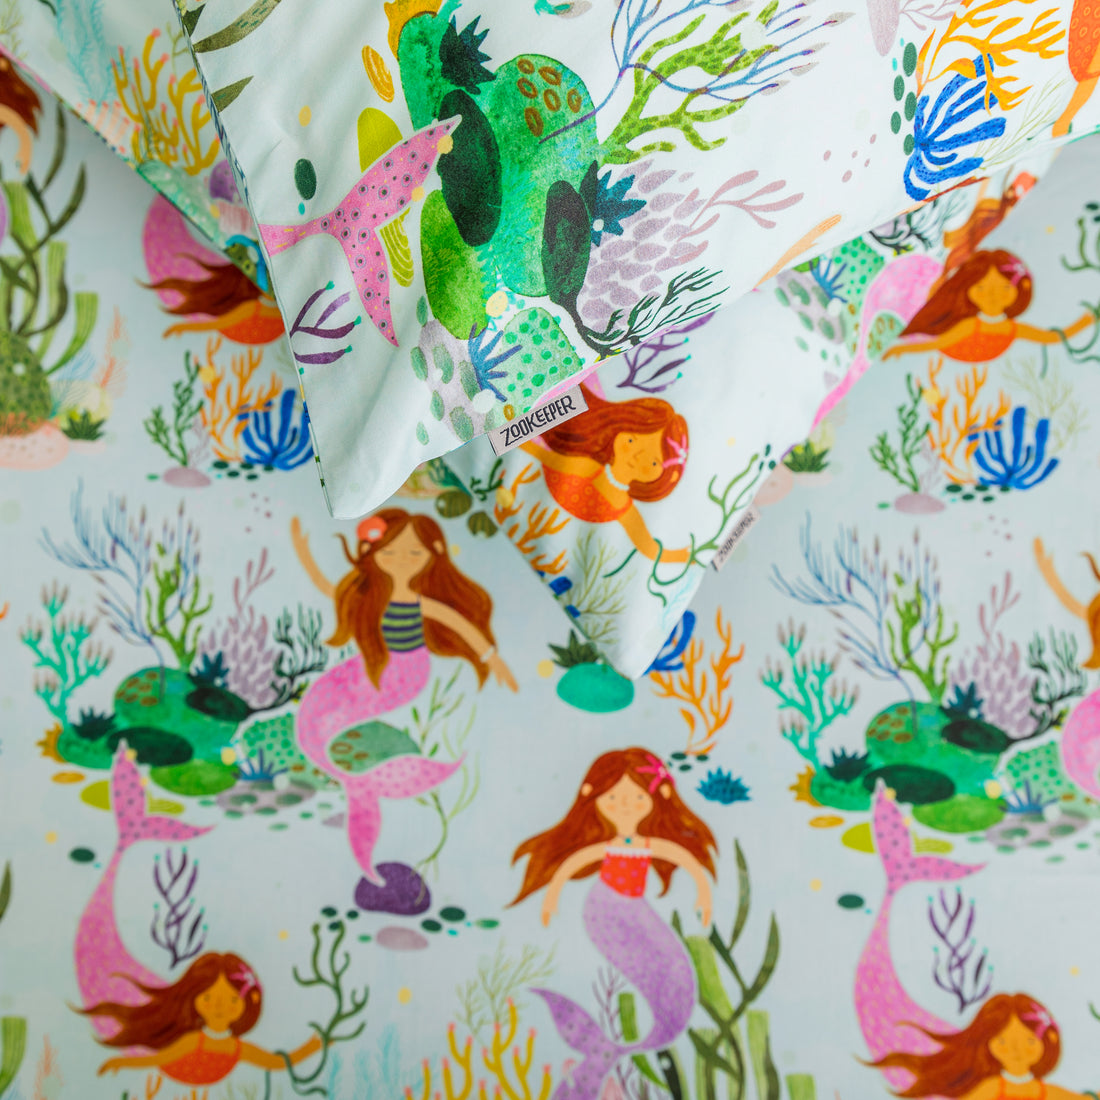 Mermaid's Birthday Party Bed Sheet and Shams Set